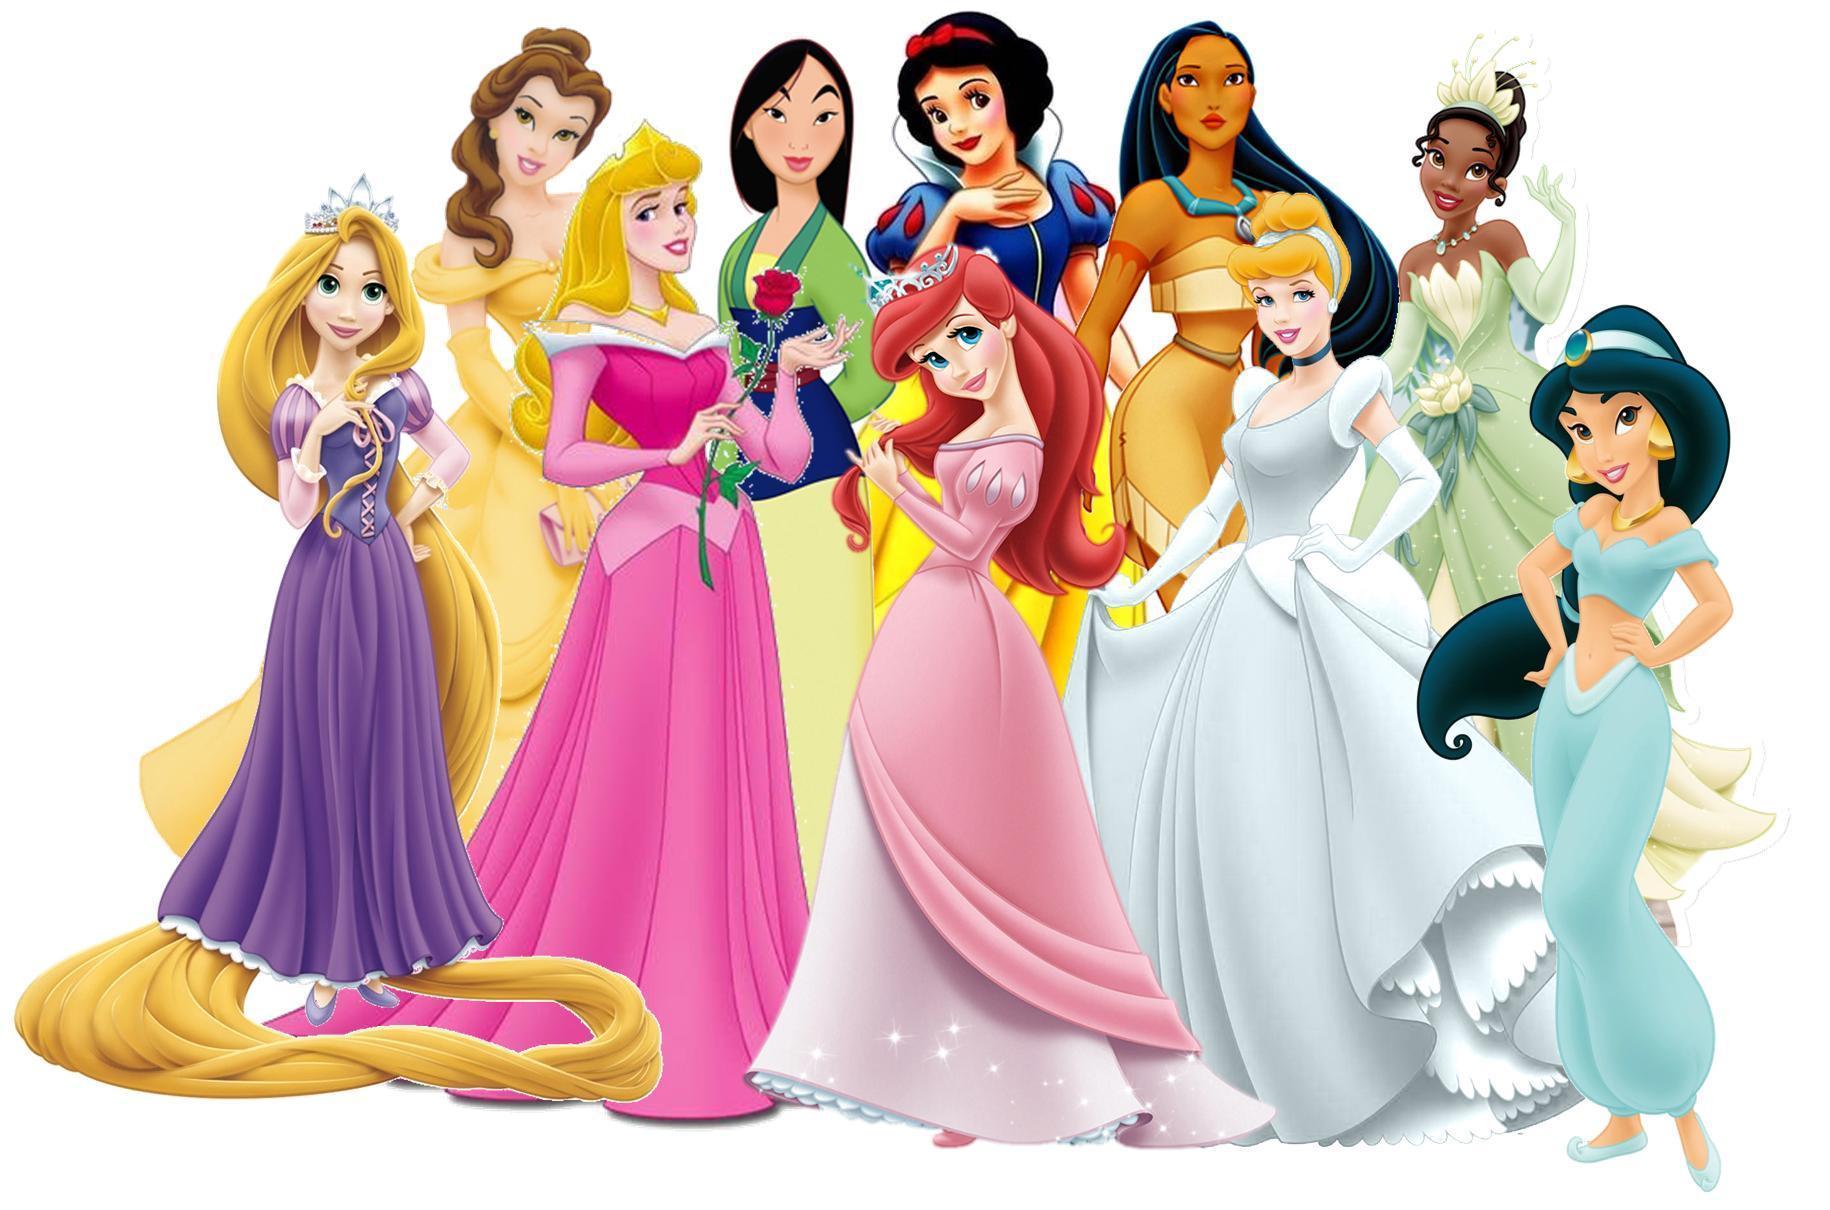 Disney Princess characters picture, Disney Princess characters